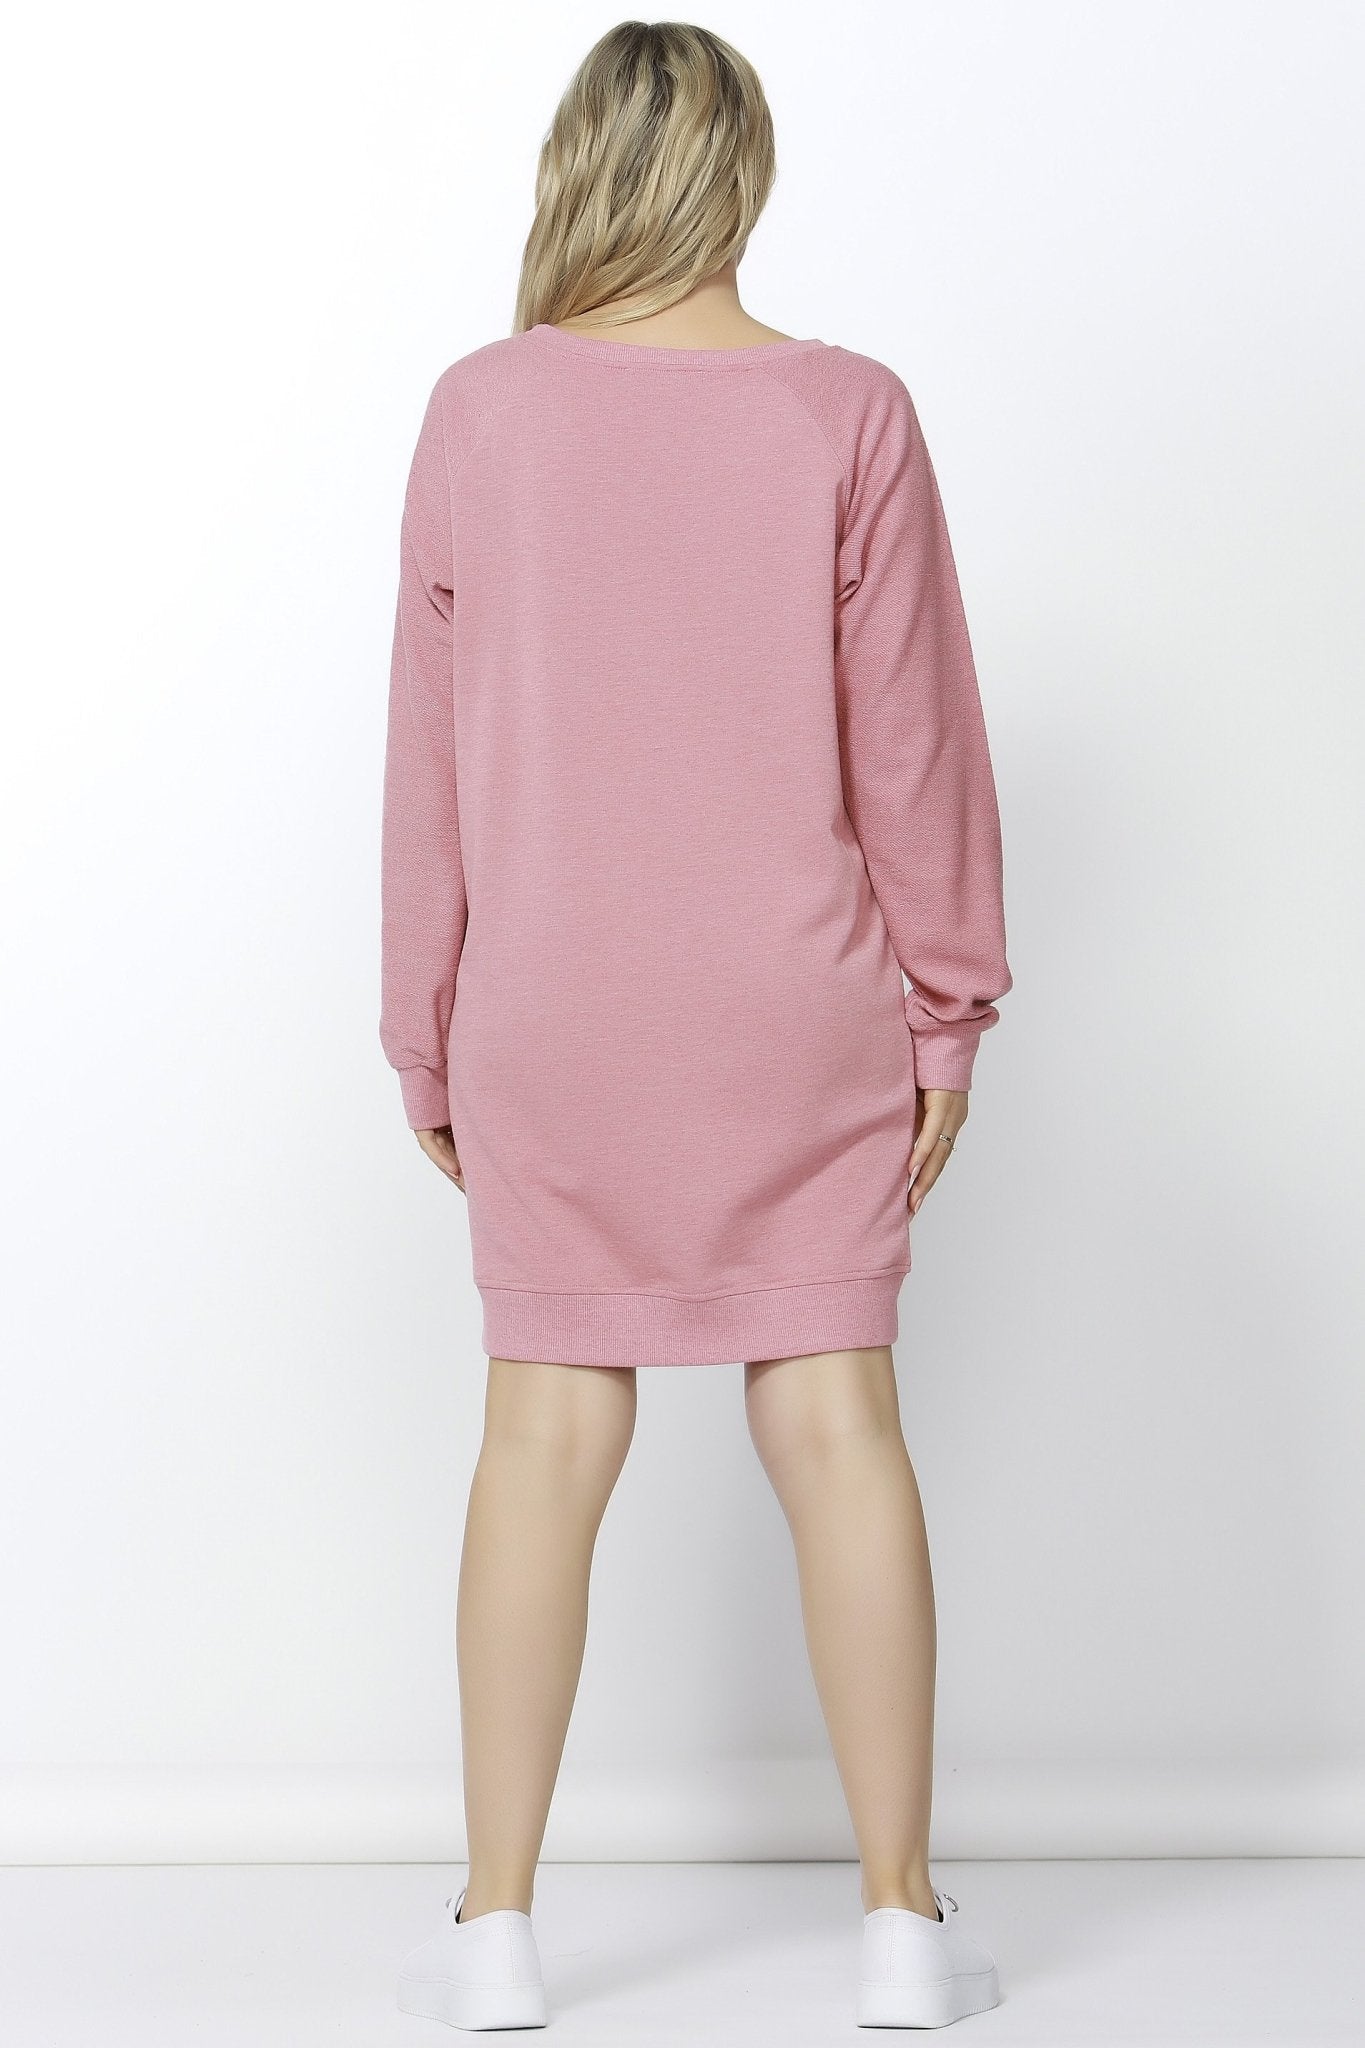 Betty Basics Nico Sweater Dress in Rose Pink Size 6 or 8 - Hey Sara